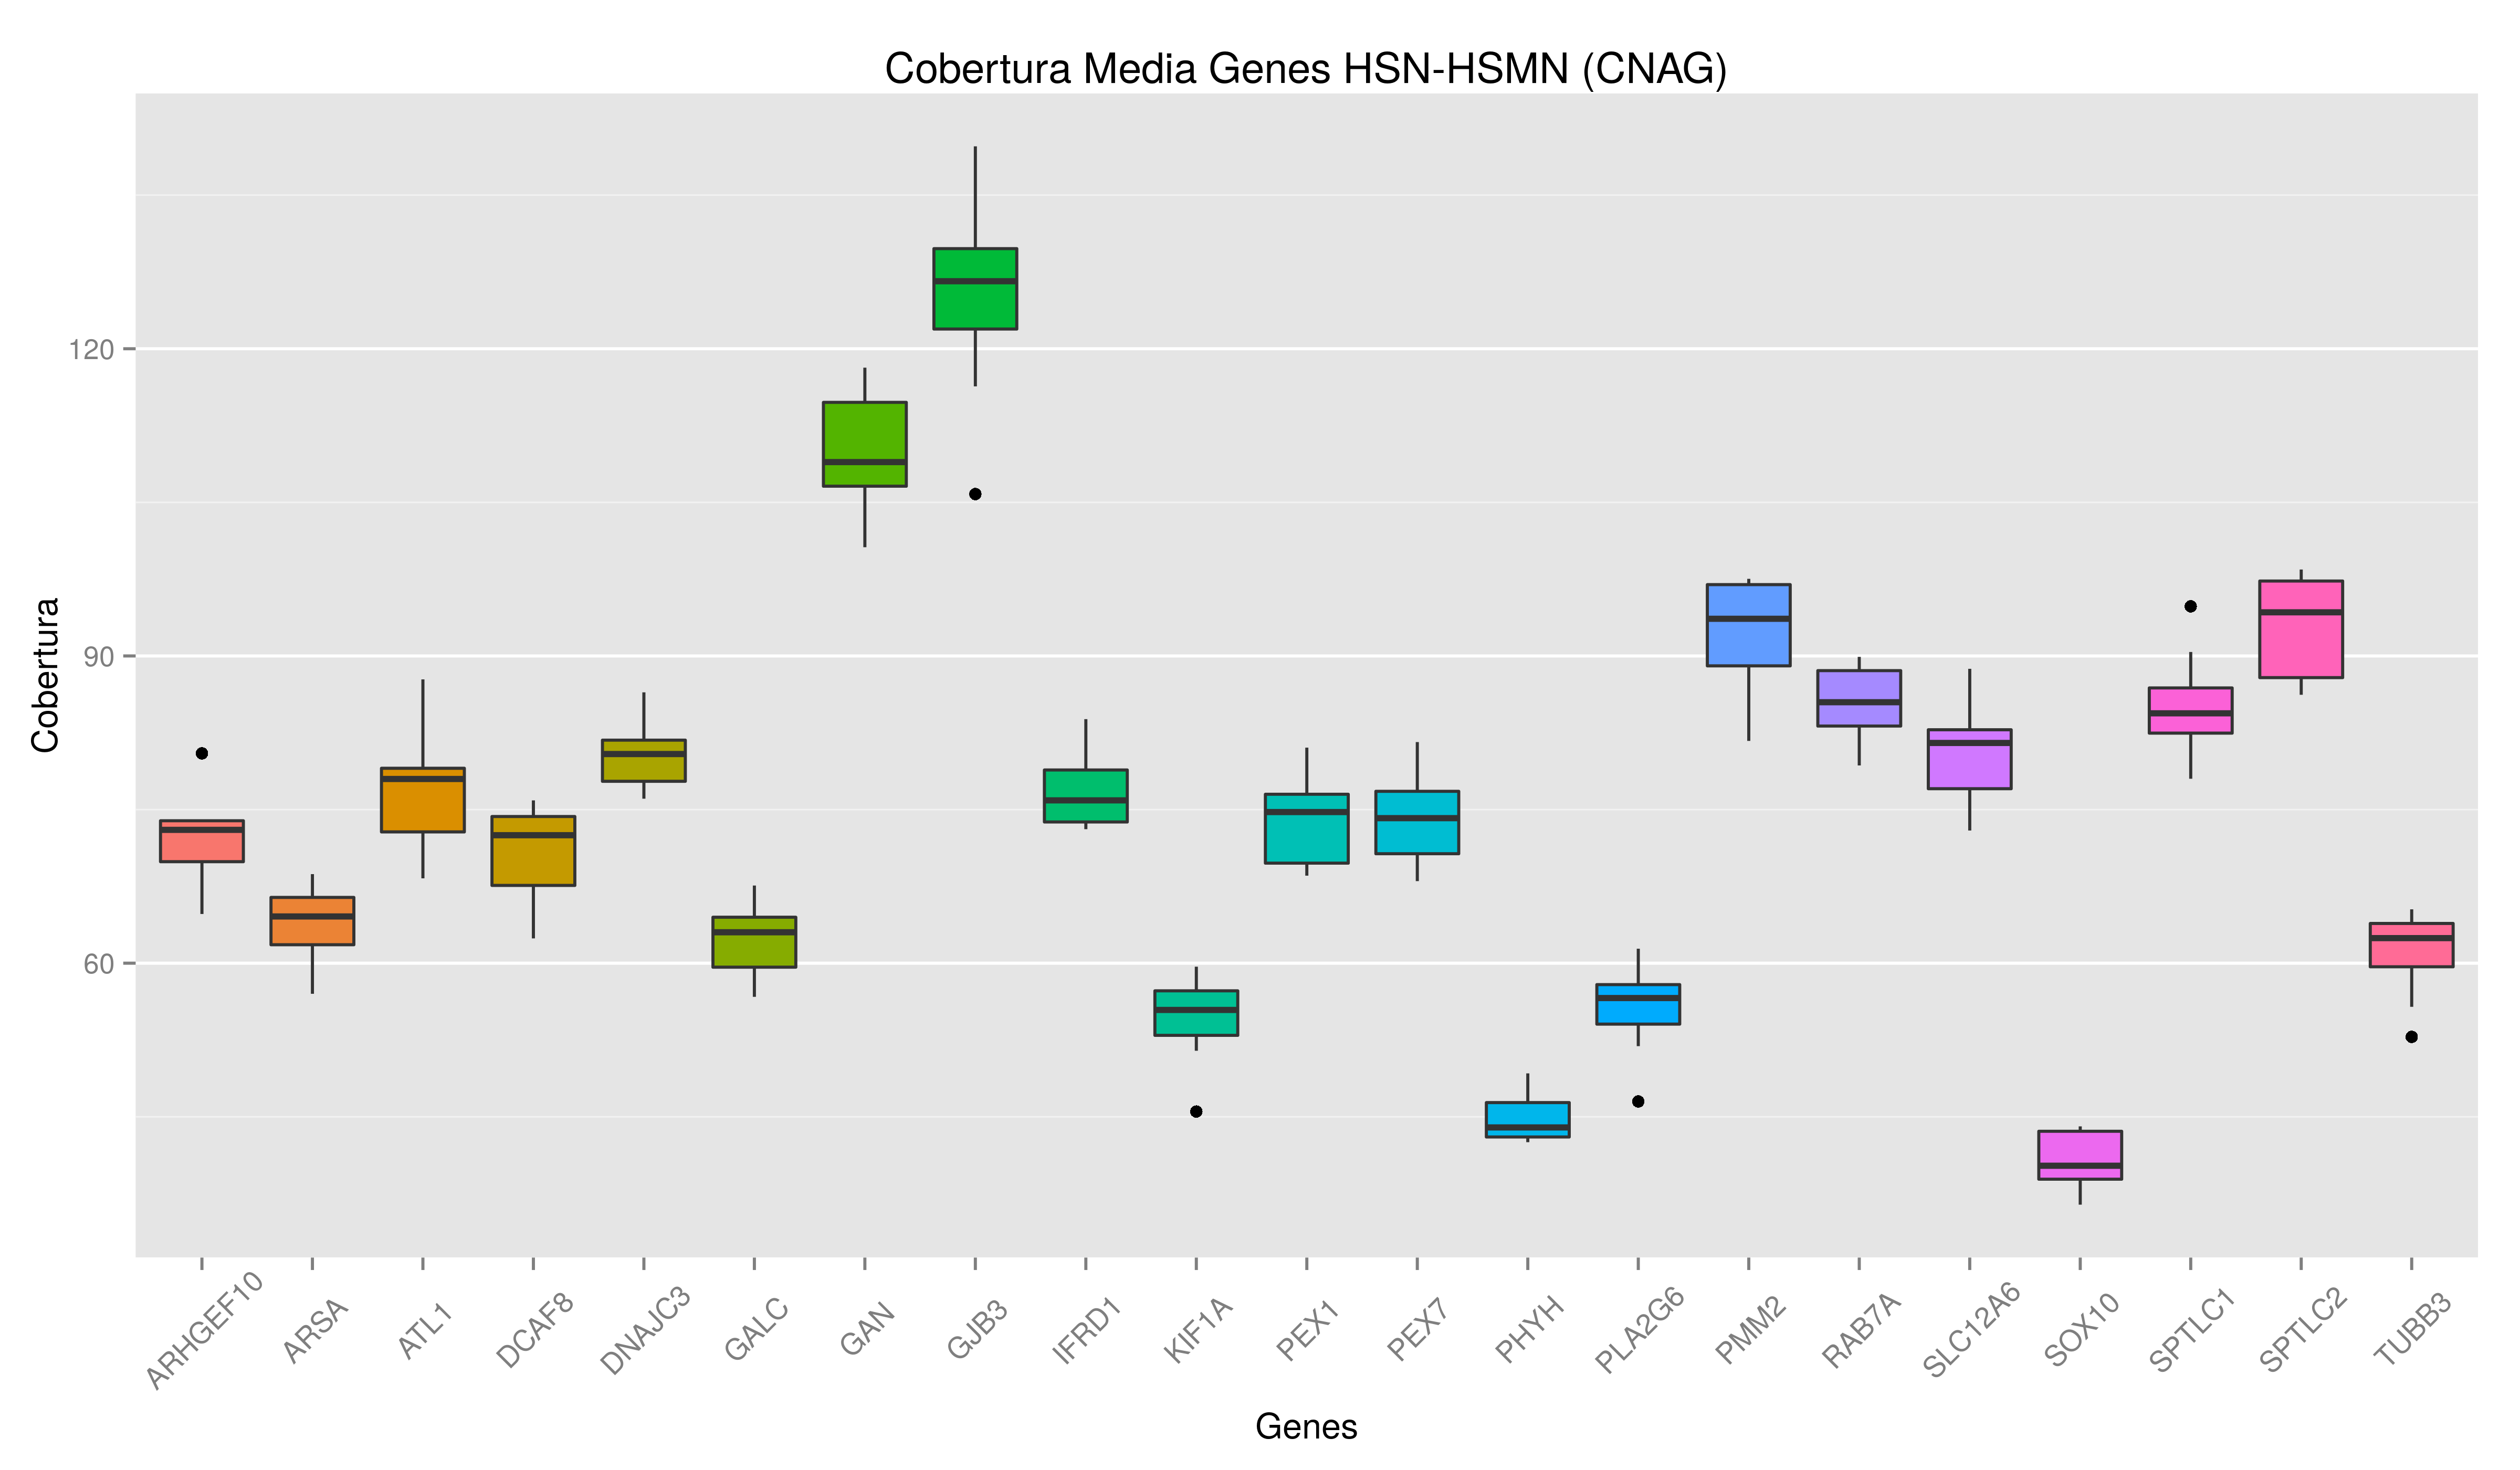 HSN-HSMN genes CNAG